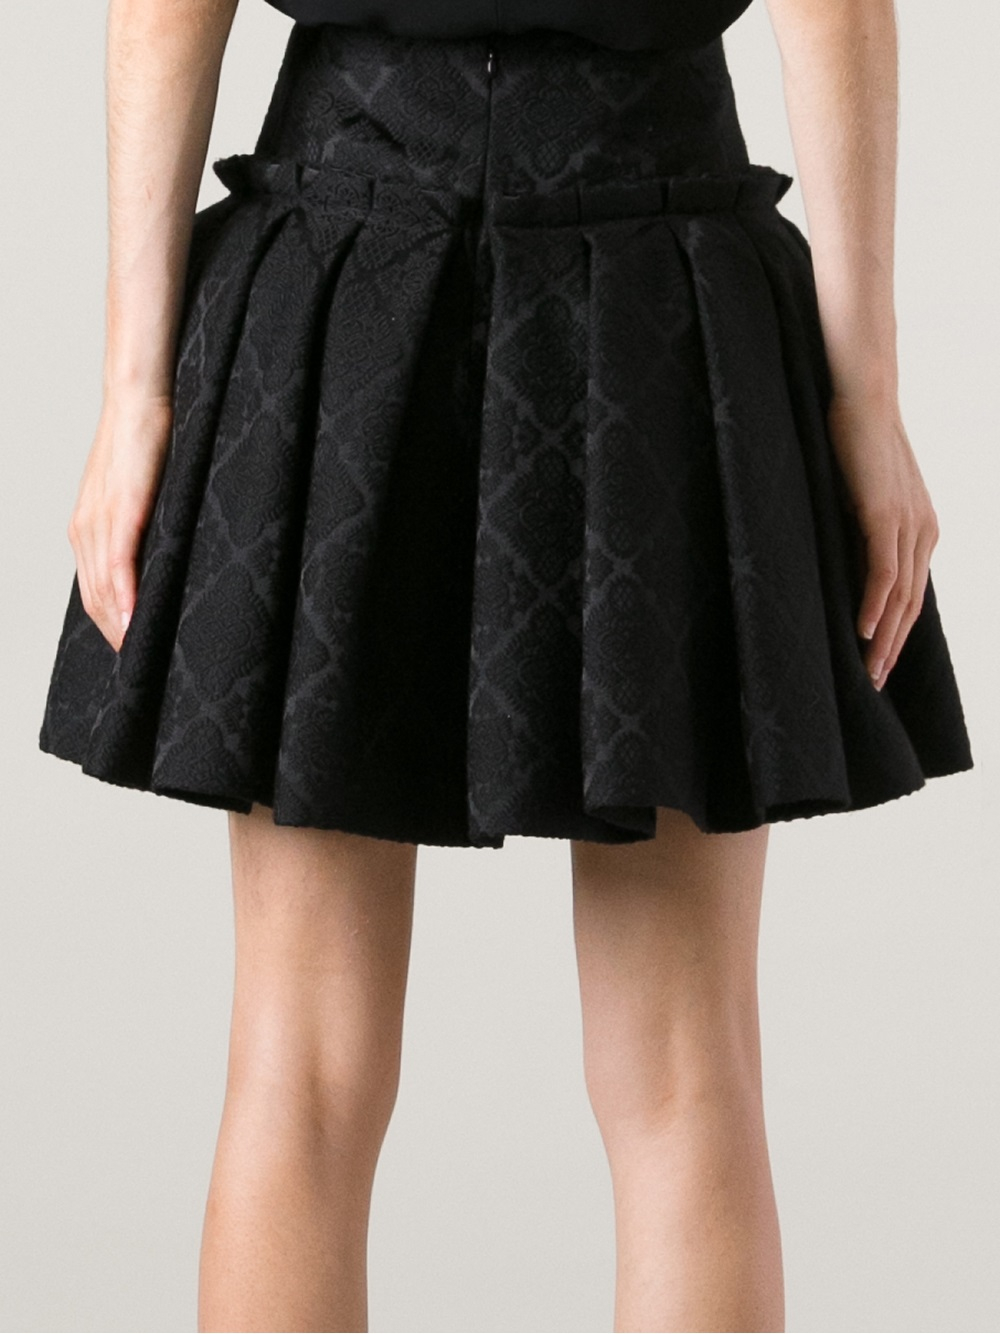 Lyst - Alexander Mcqueen Pleated Skirt in Black